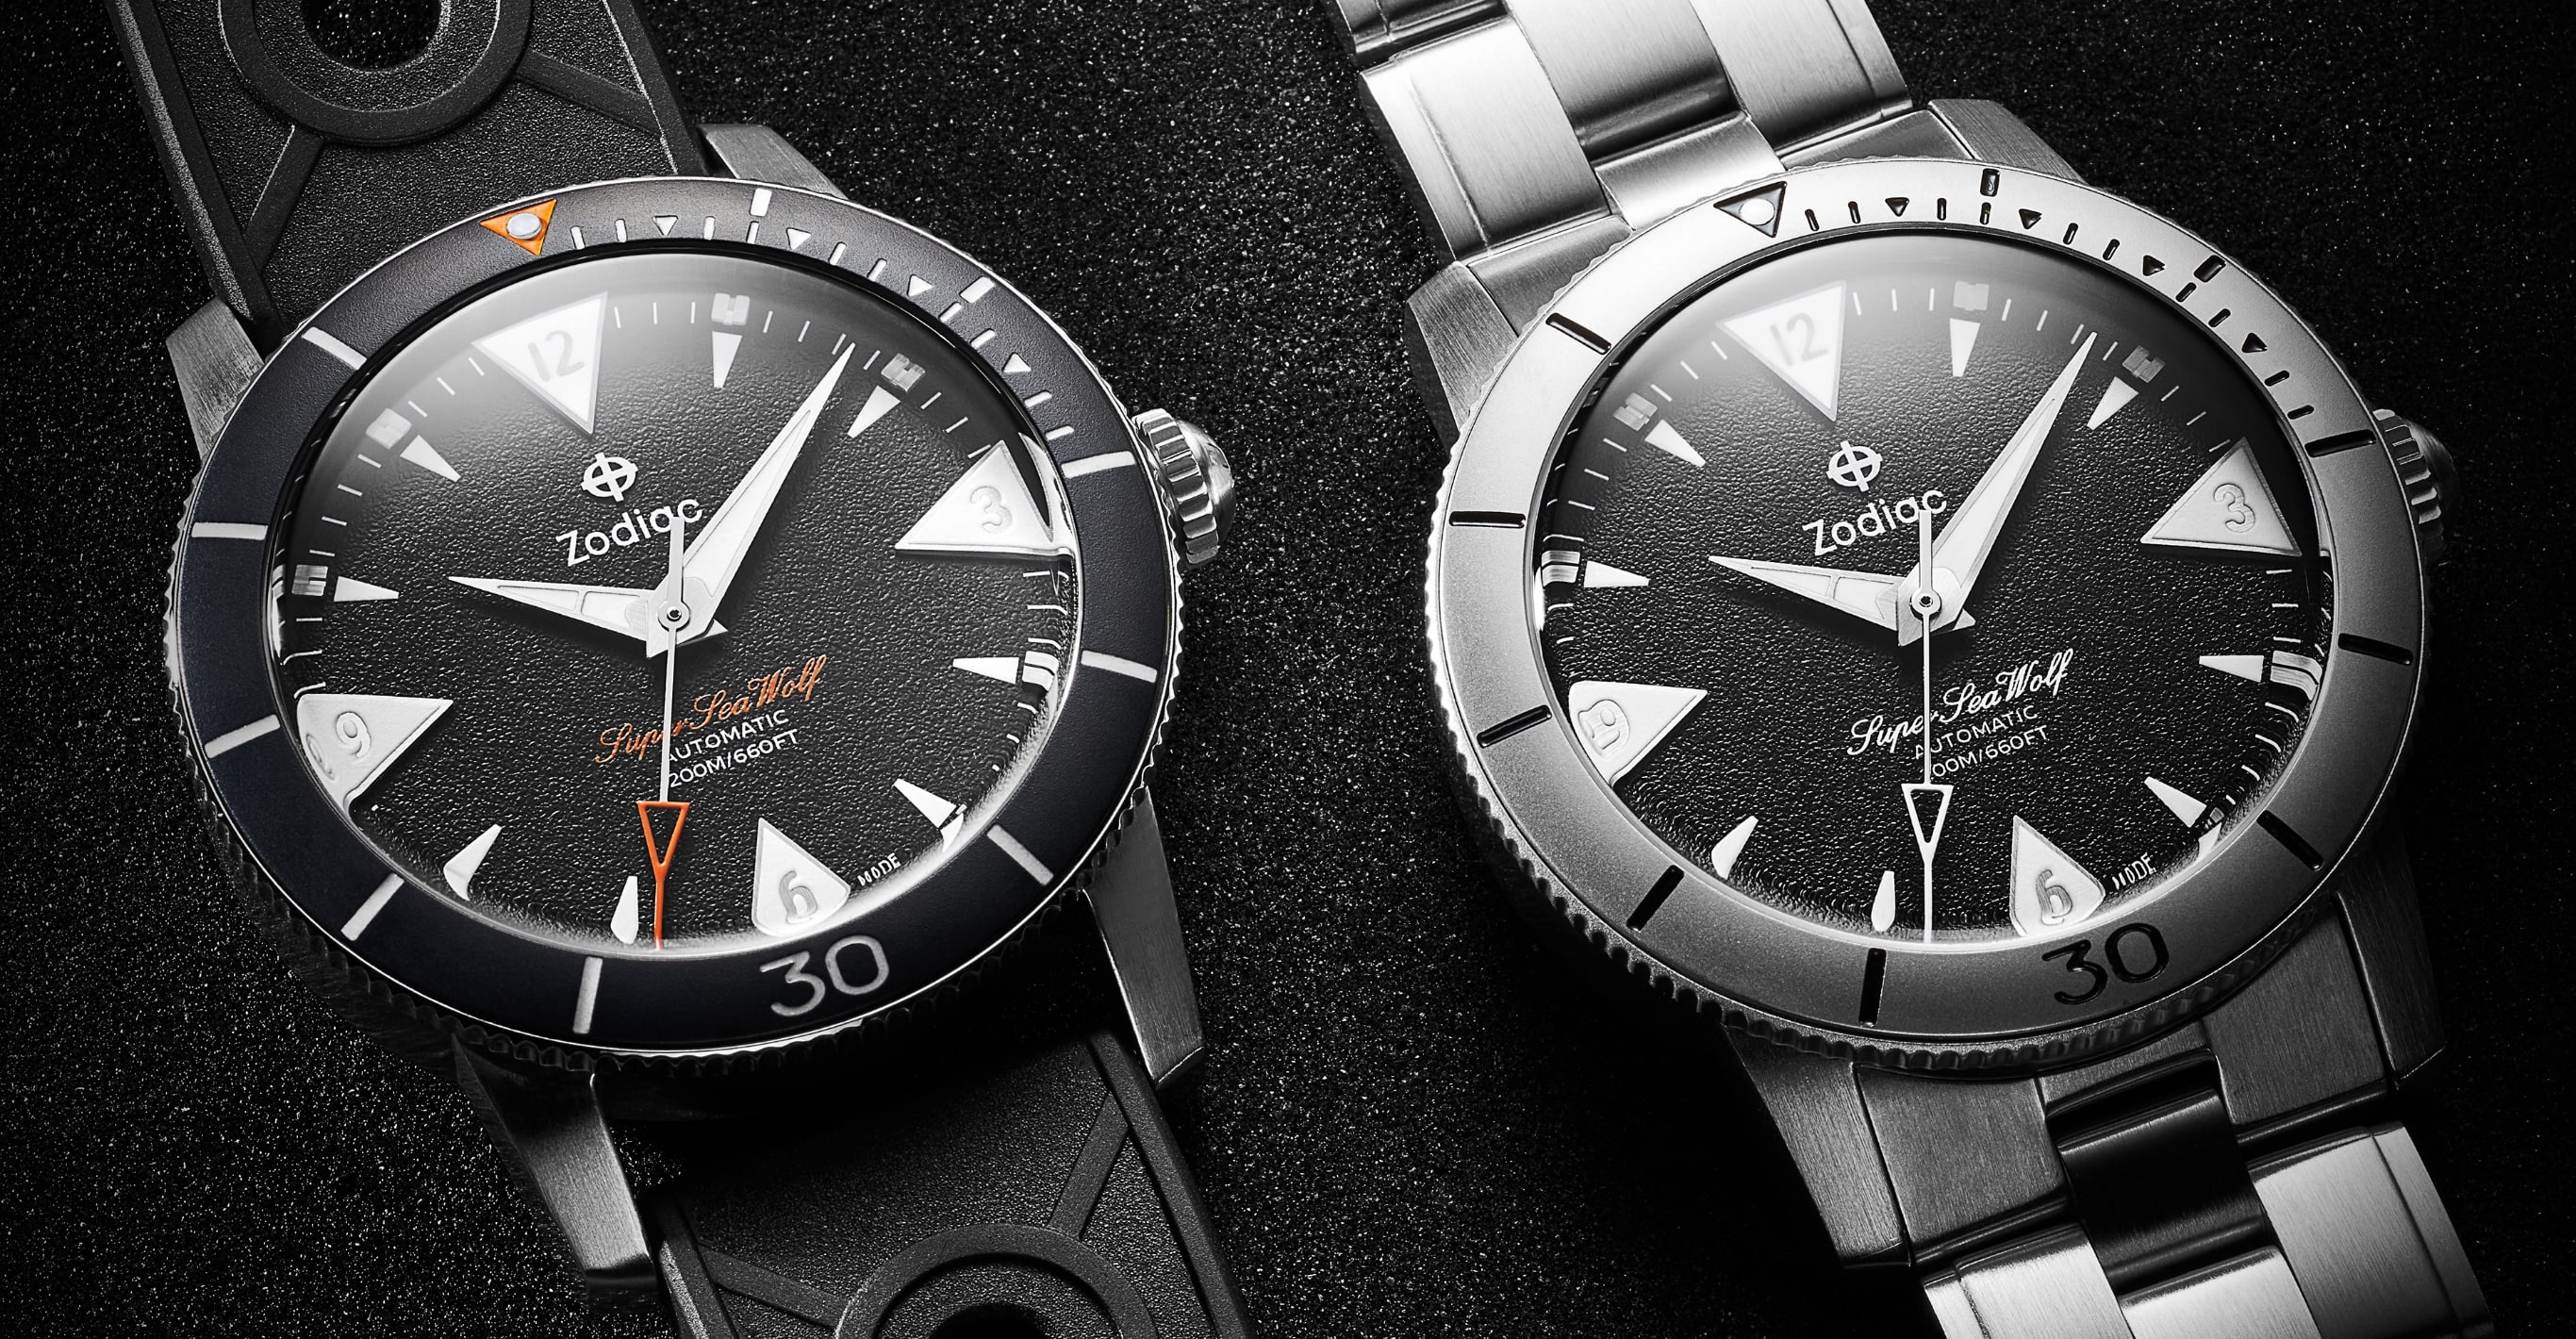 Super Sea Wolf Compression watch.